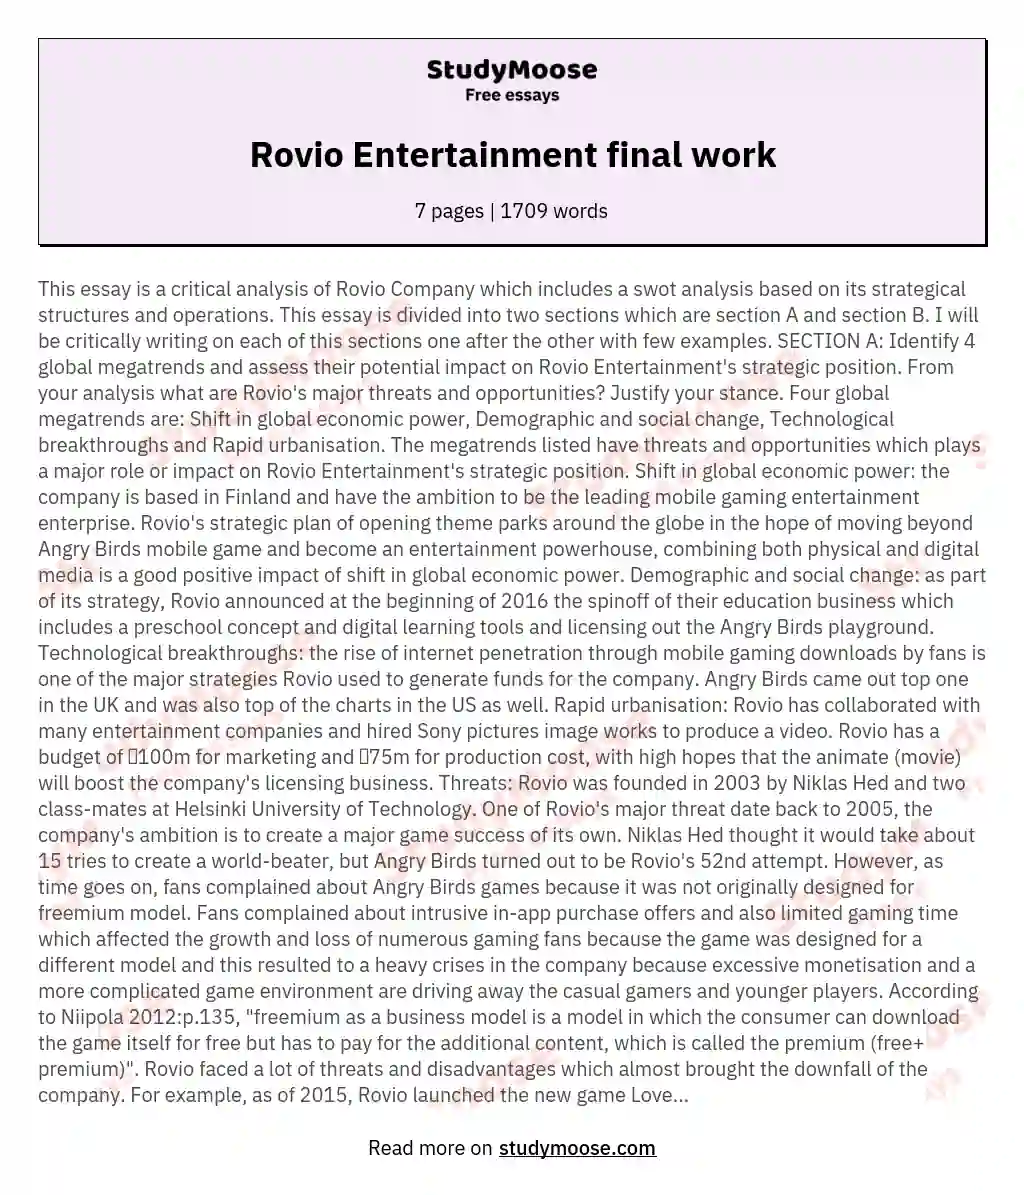 Rovio Entertainment final work essay